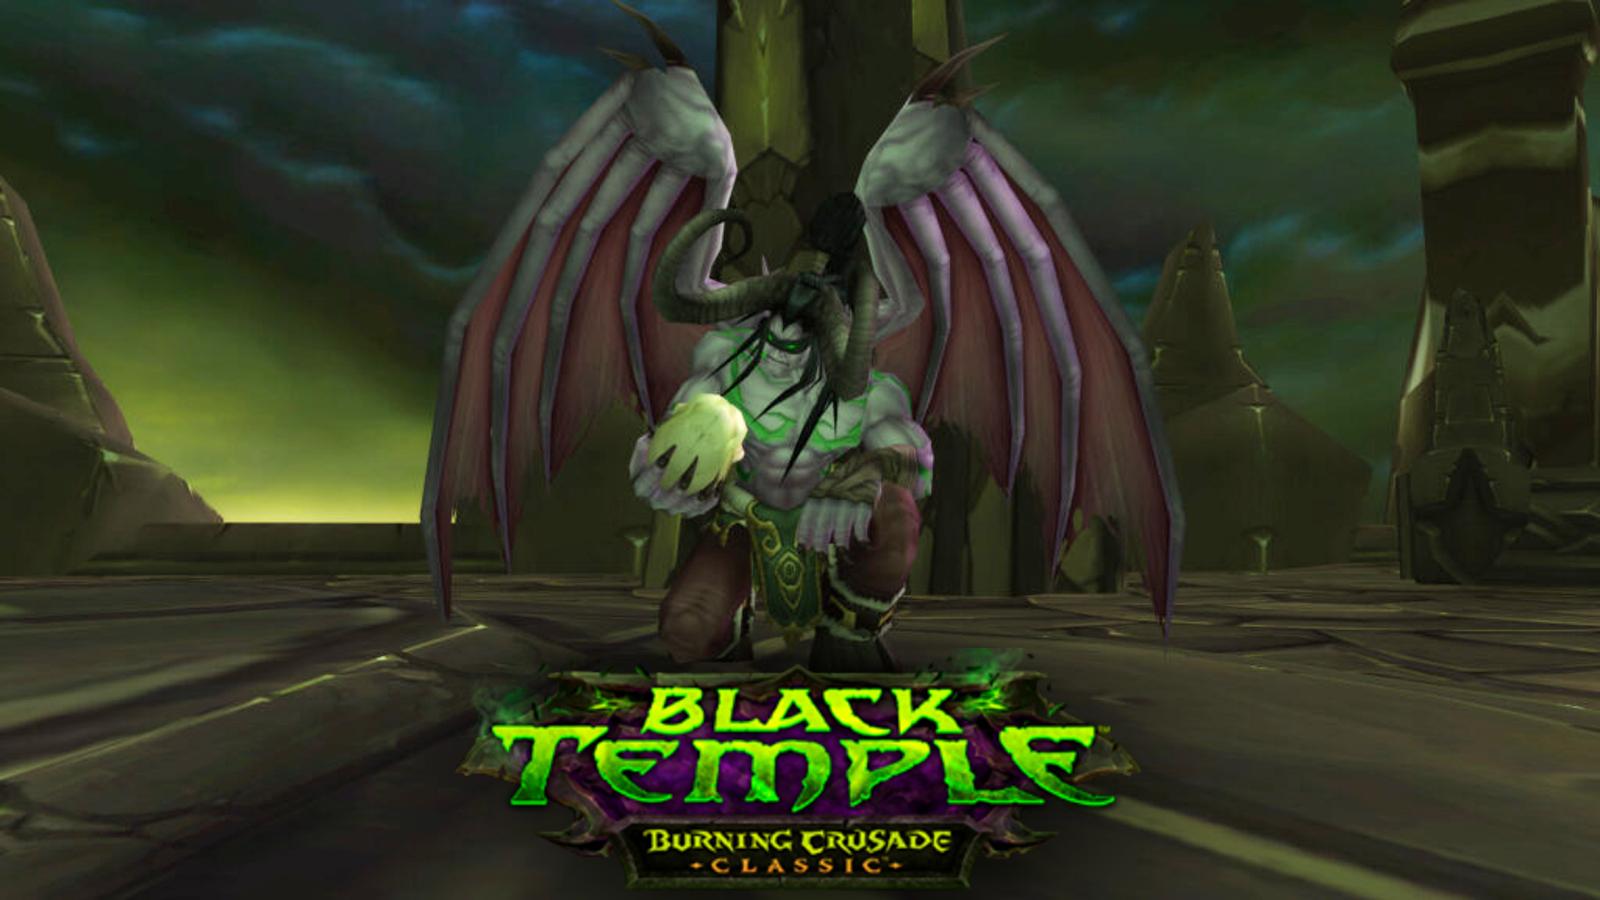 world of warcraft wow tbc classic burning crusade illidan stormrage with black temple logo